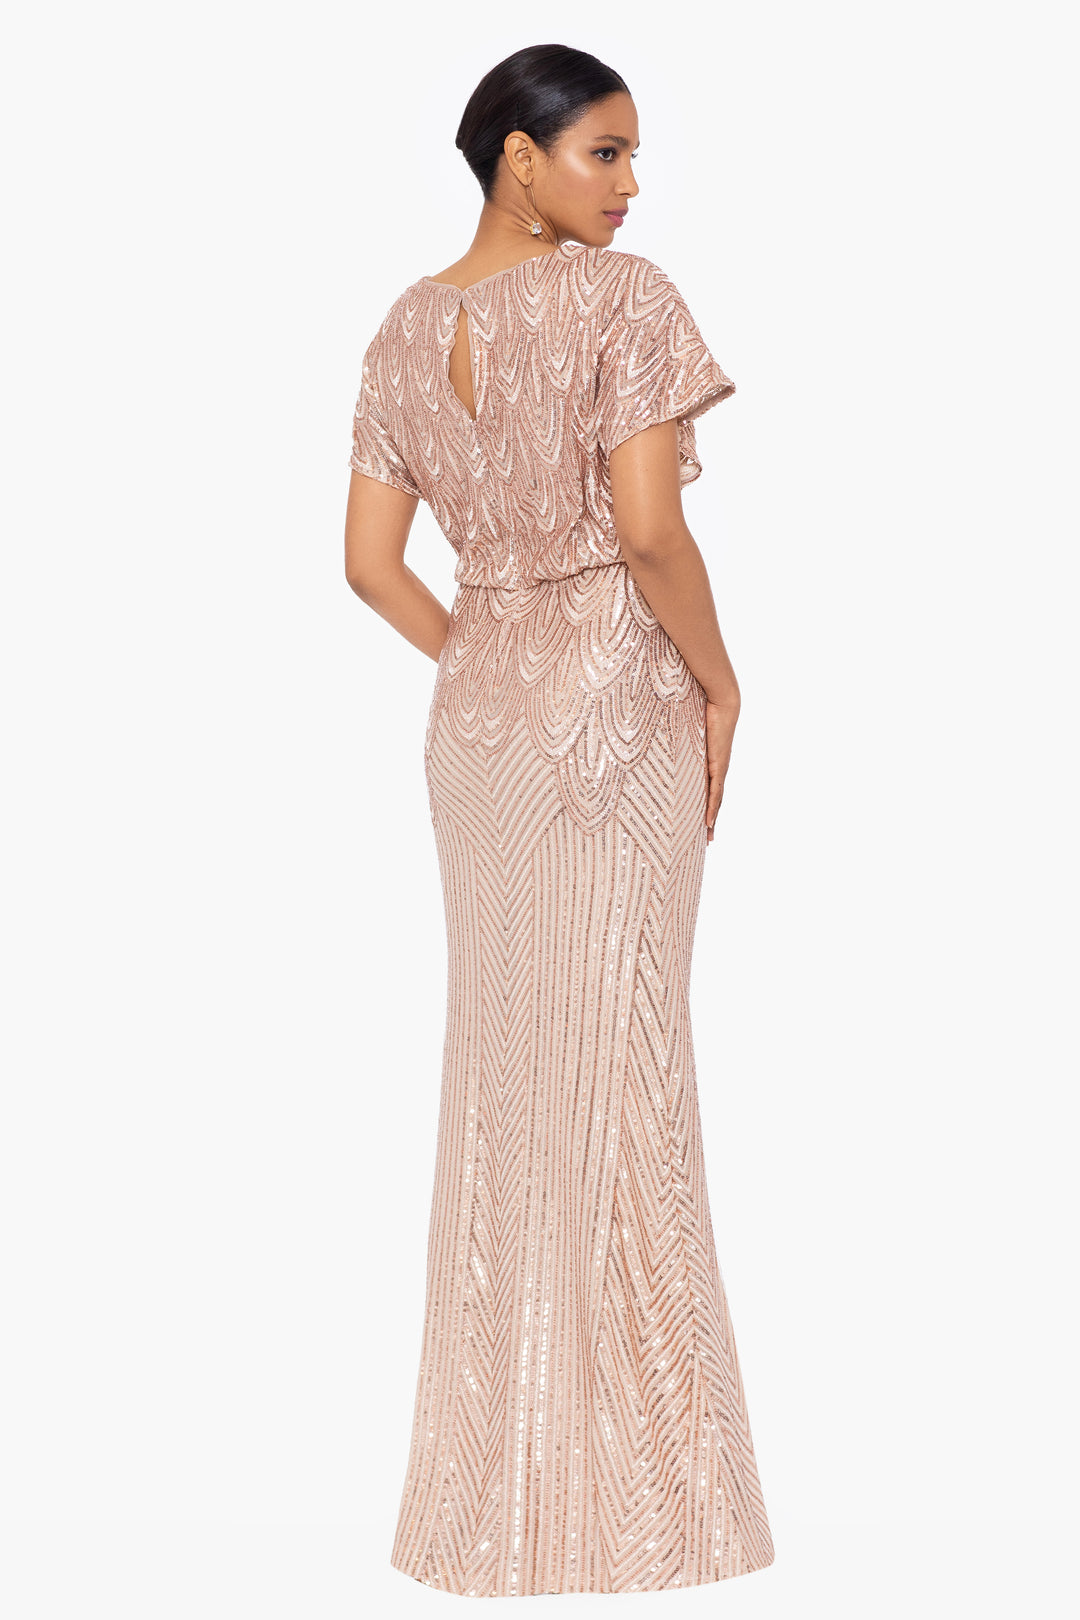 "Amara" Sequin Blouson Floor Length Dress